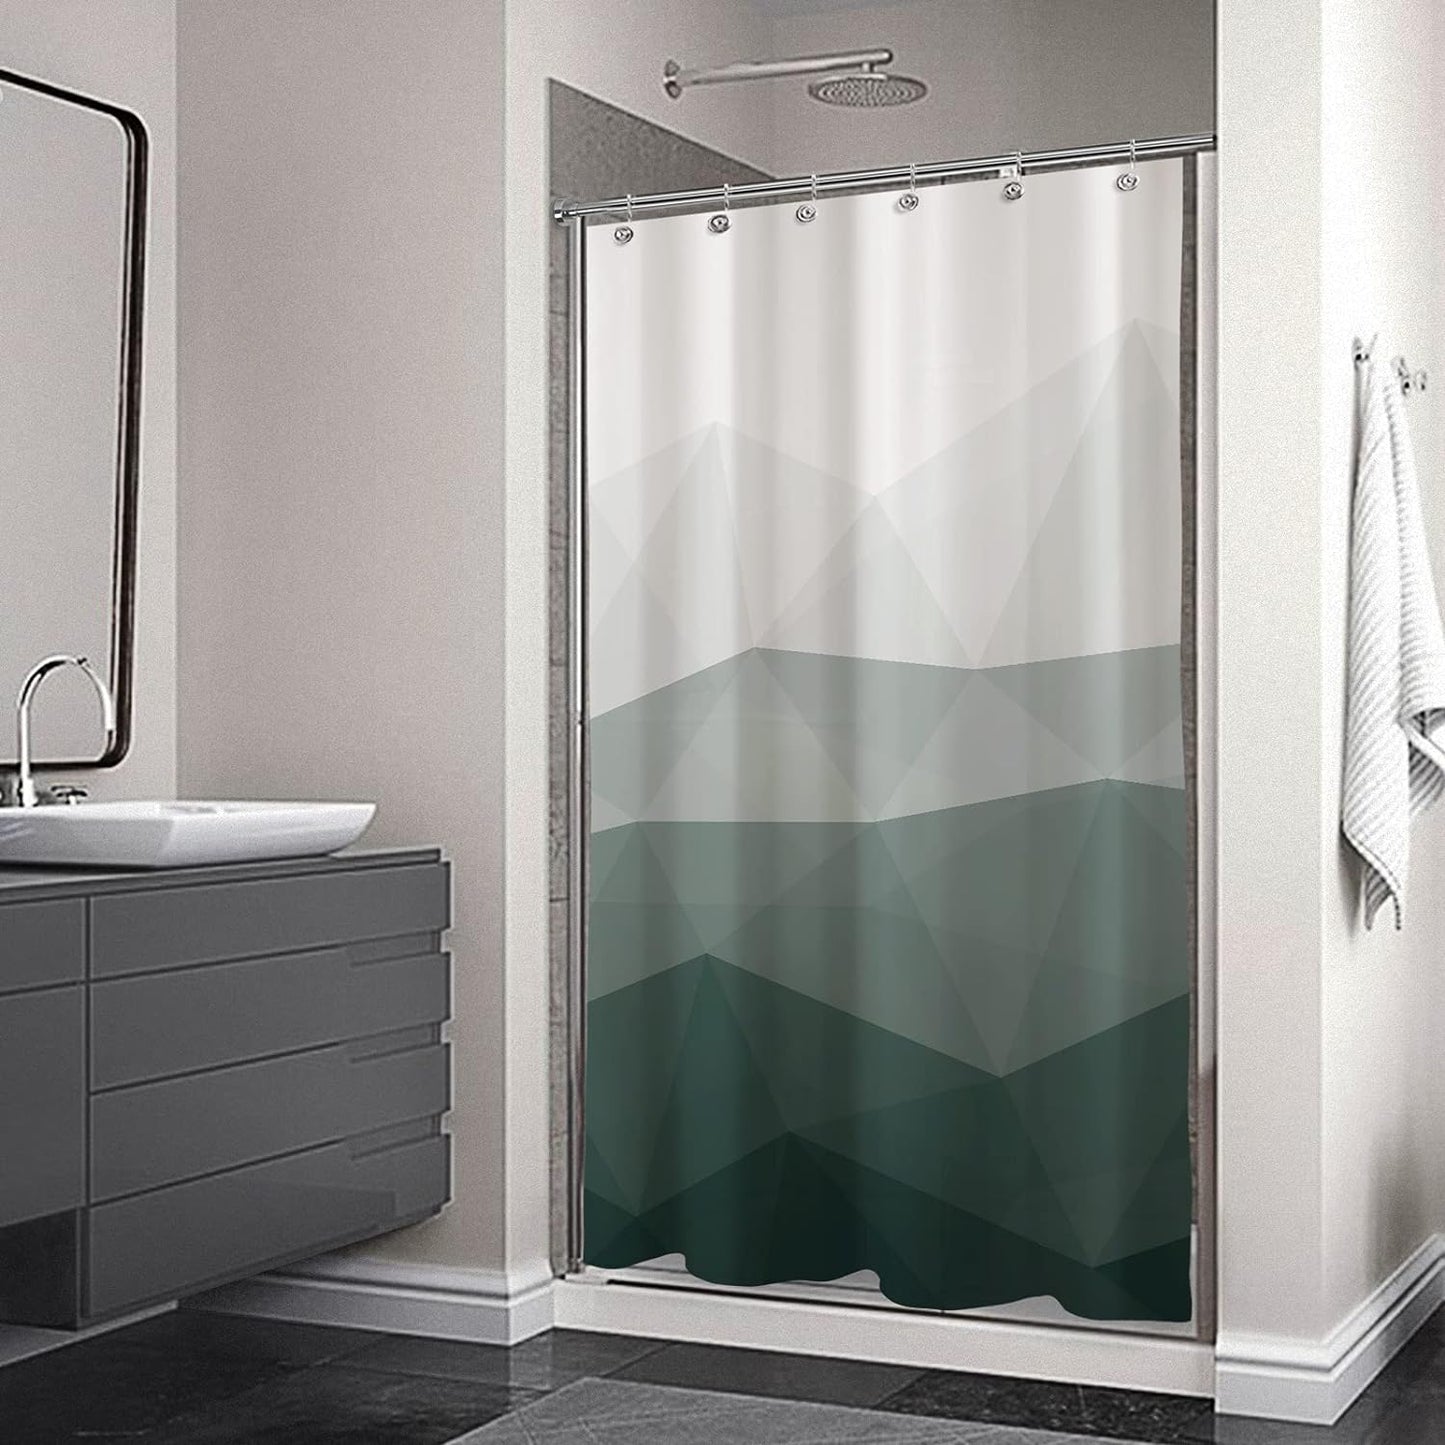 Sunlit Designer Popular Shower Curtain, Ombre Blue Fabric Contemporary Shower Curtains for Bathroom Décor